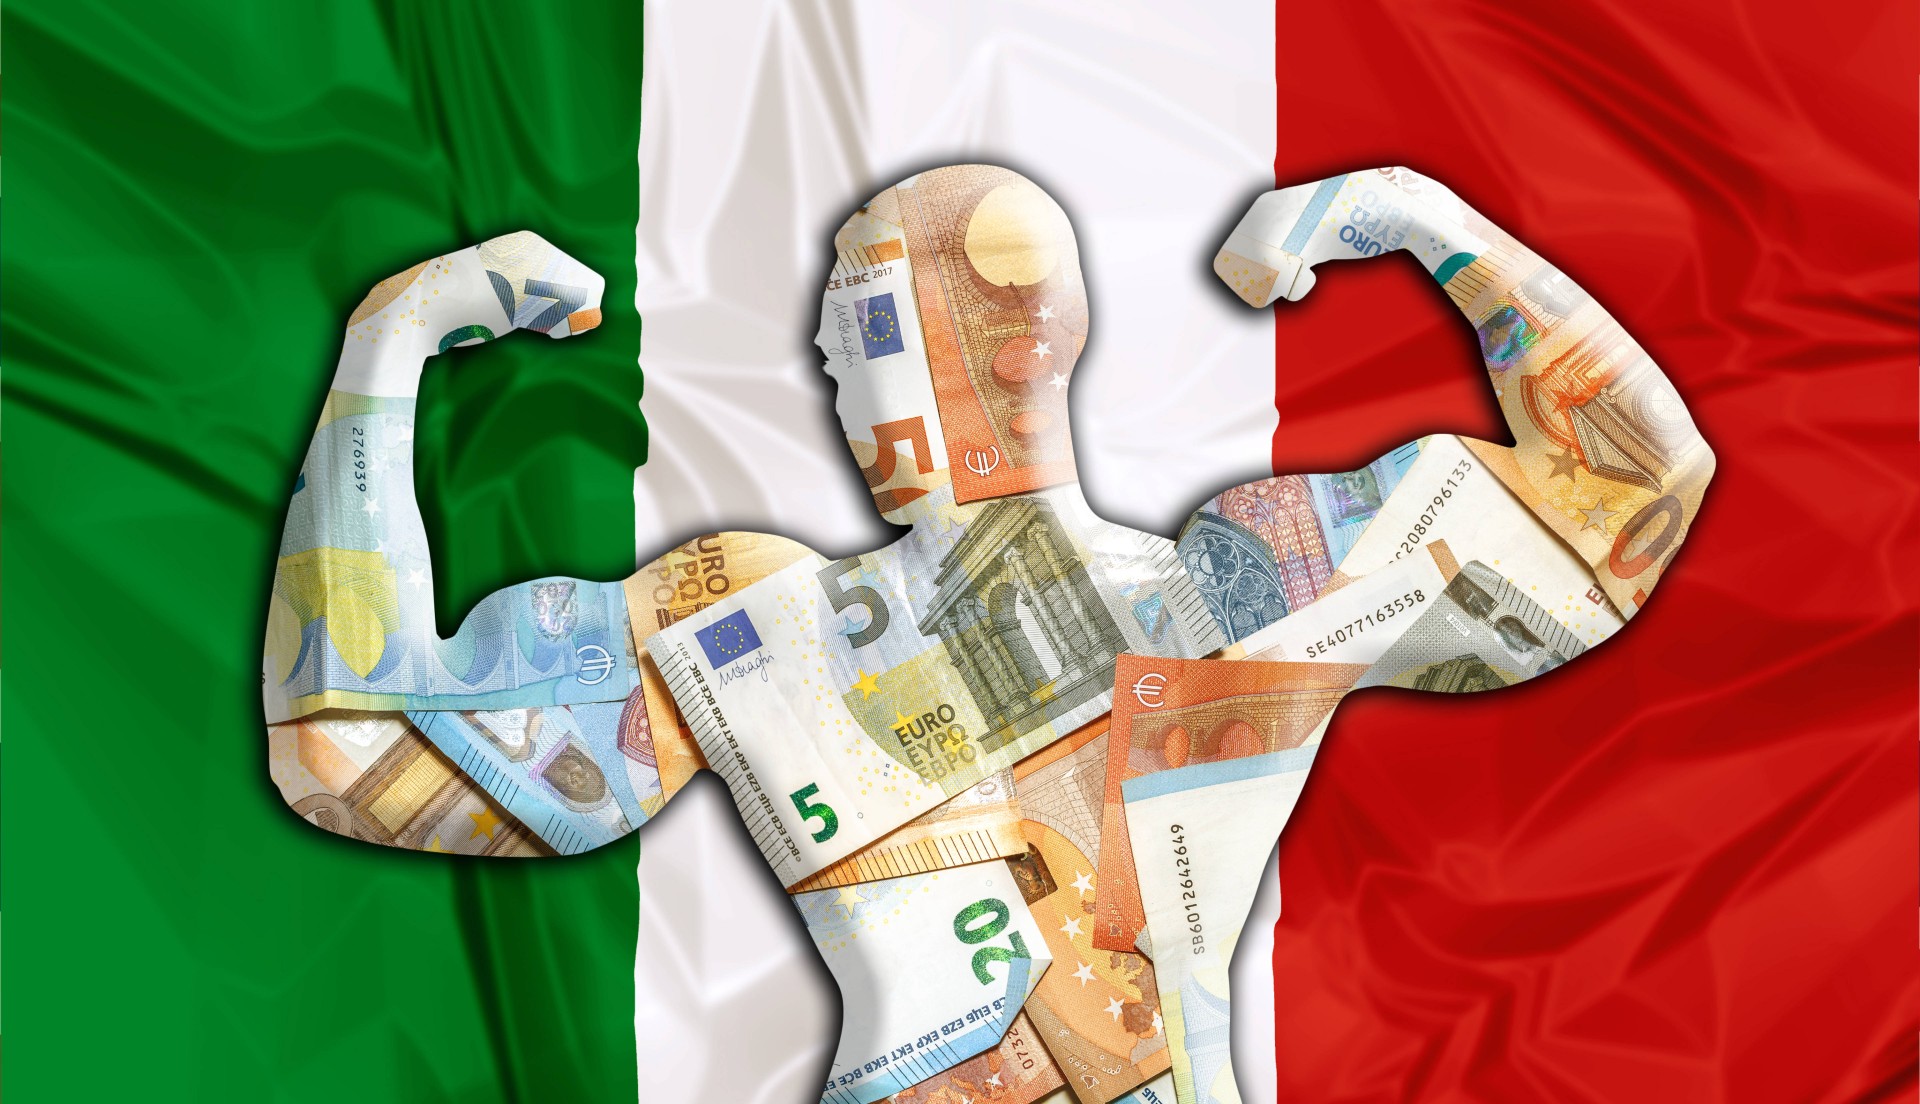 The Italian job, αλά Ελληνικά: Από την UniCredit (9% της Alpha), στην Intesa Sanpaolo που «παίζει» για την Τρ. Πειραιώς και την ION που είχε κάνει πρόταση για το 27% -  Το 85% των διαθεσίμων του ιταλικού fund Helikon (που ιδρύθηκε αφού ανέλαβε κυβέρνηση η ΝΔ το 2019) είναι τοποθετημένο σε ελληνικές μετοχές, ενώ Ιταλοί (Sec Newgate) εξαγόρασαν την περίφημη εταιρεία επικοινωνίας V+O!